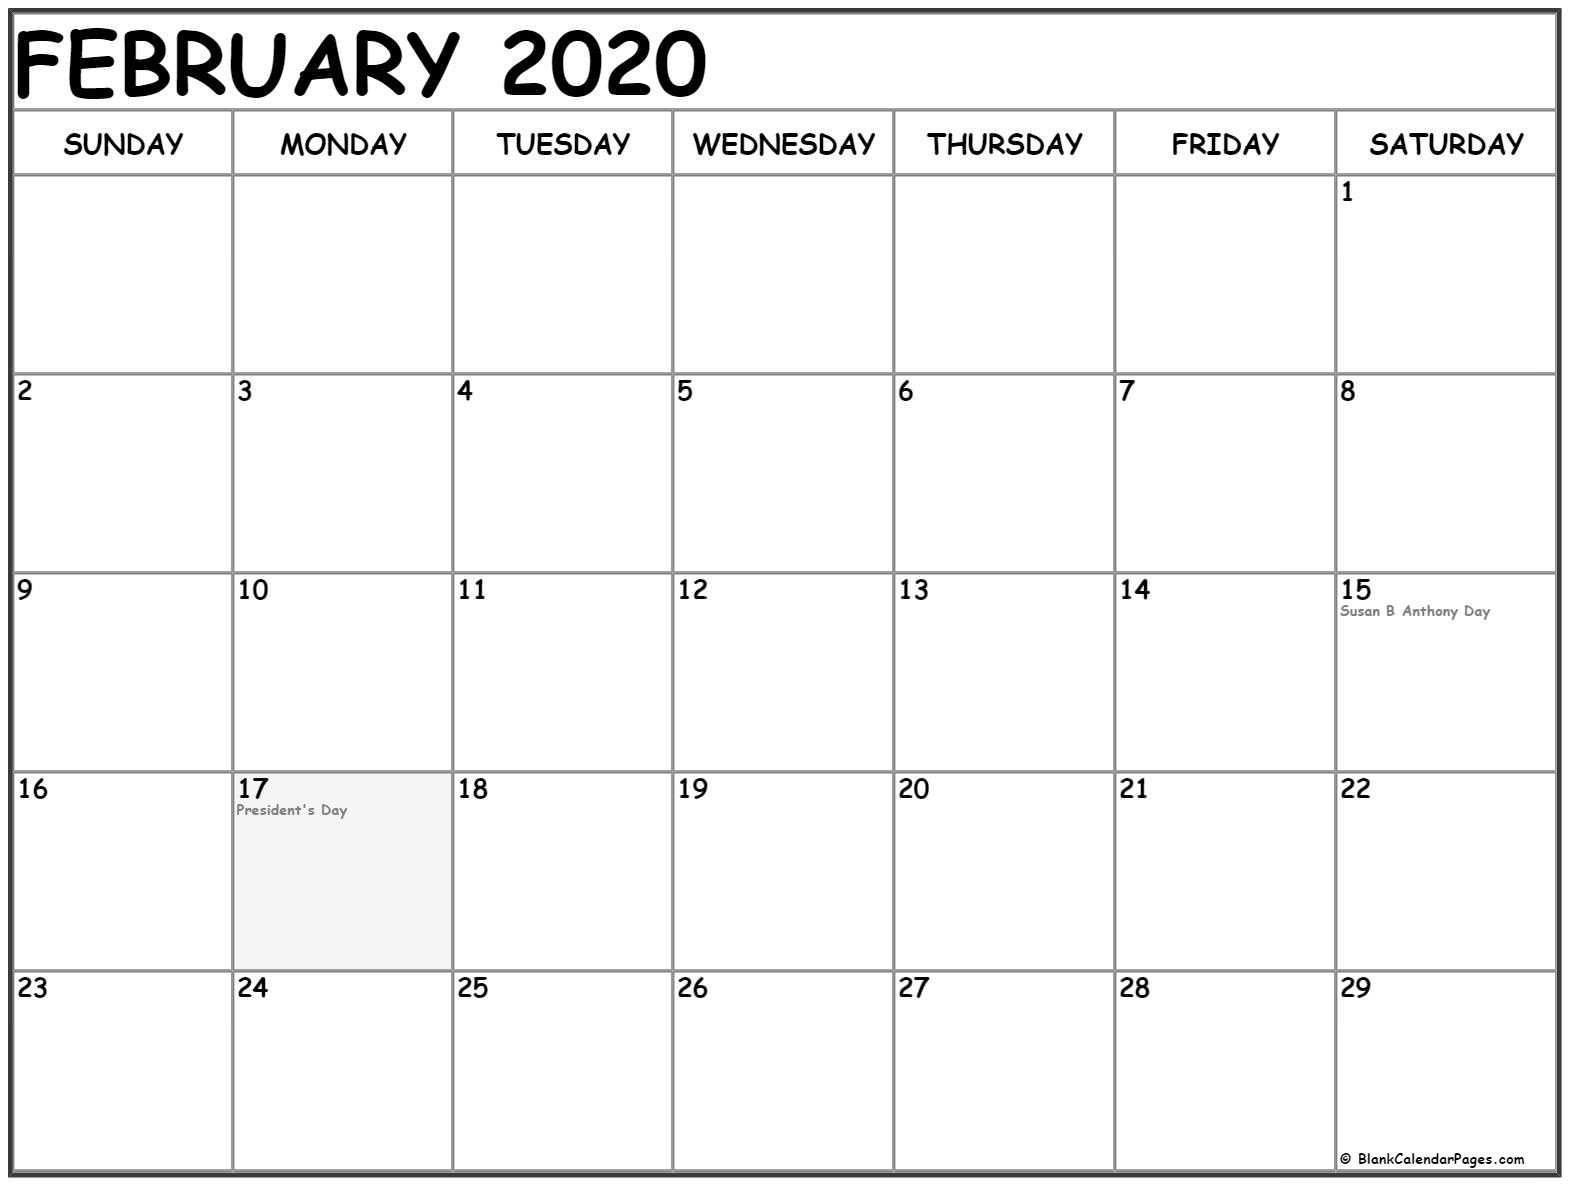 Worldwide February Holidays 2020 Calendar With Festival Dates